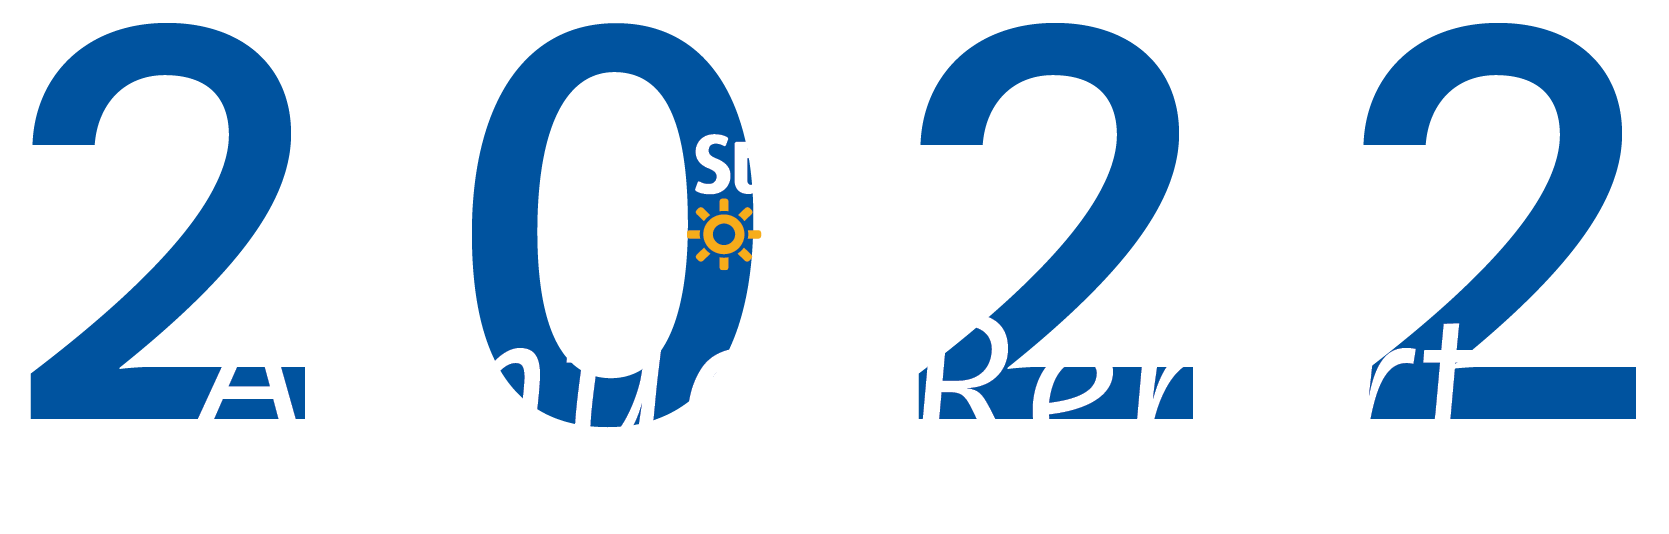 2022 annual report logo